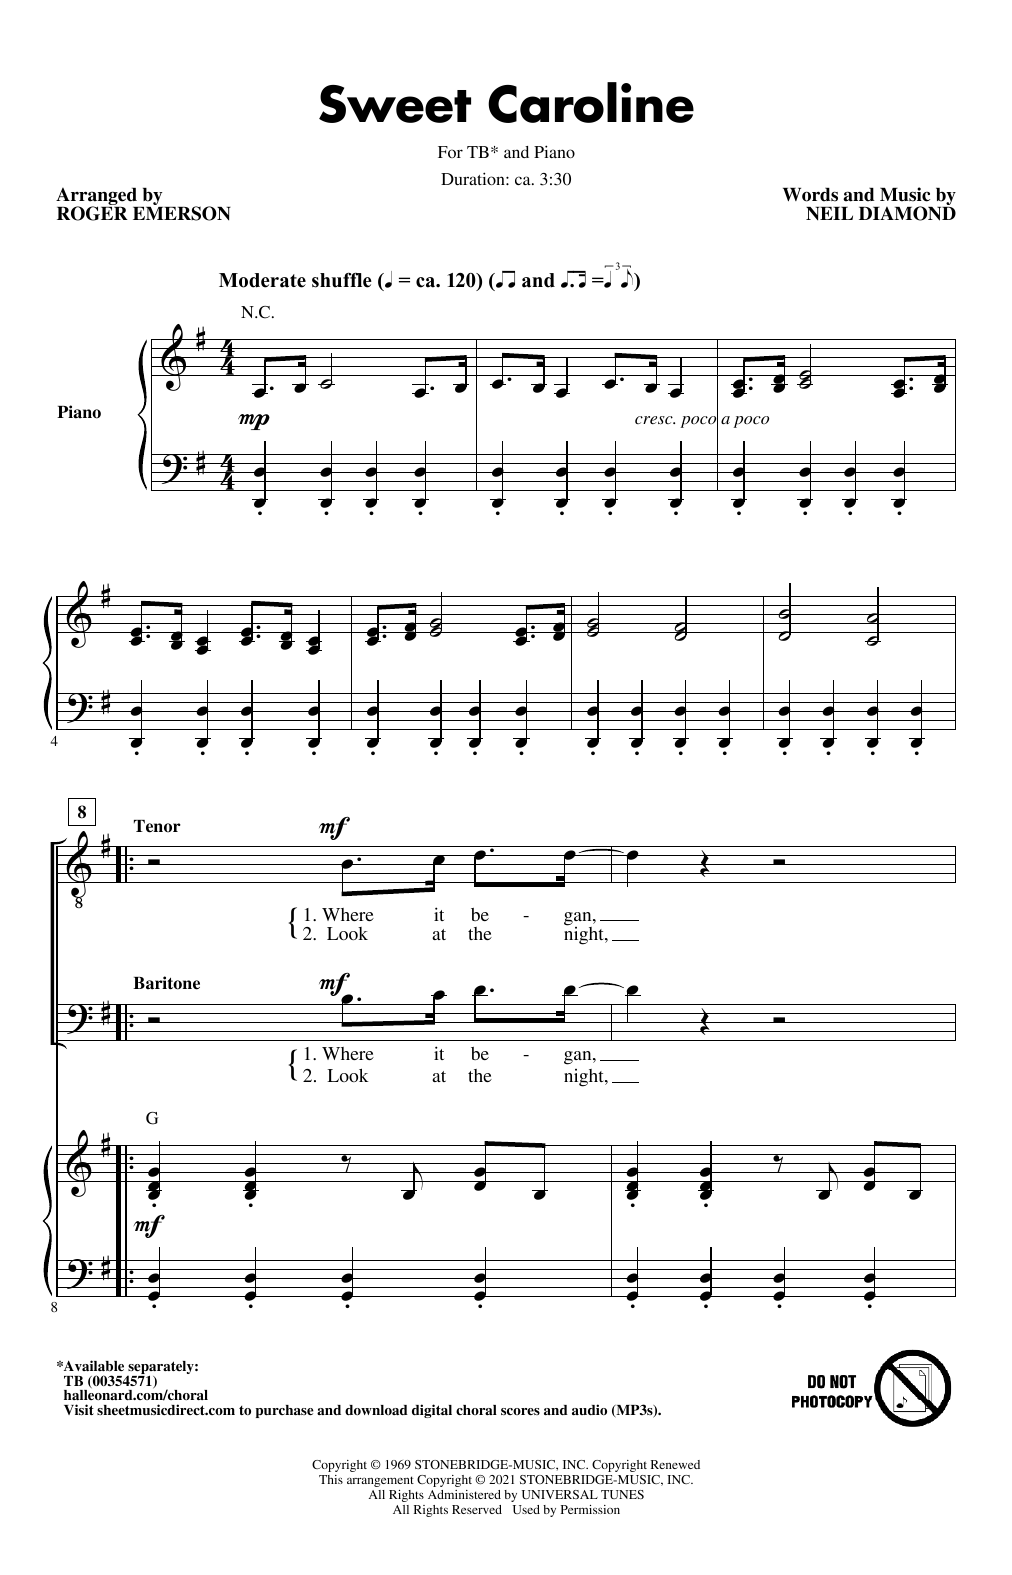 Neil Diamond Sweet Caroline (arr. Roger Emerson) Sheet Music Notes & Chords for TB Choir - Download or Print PDF